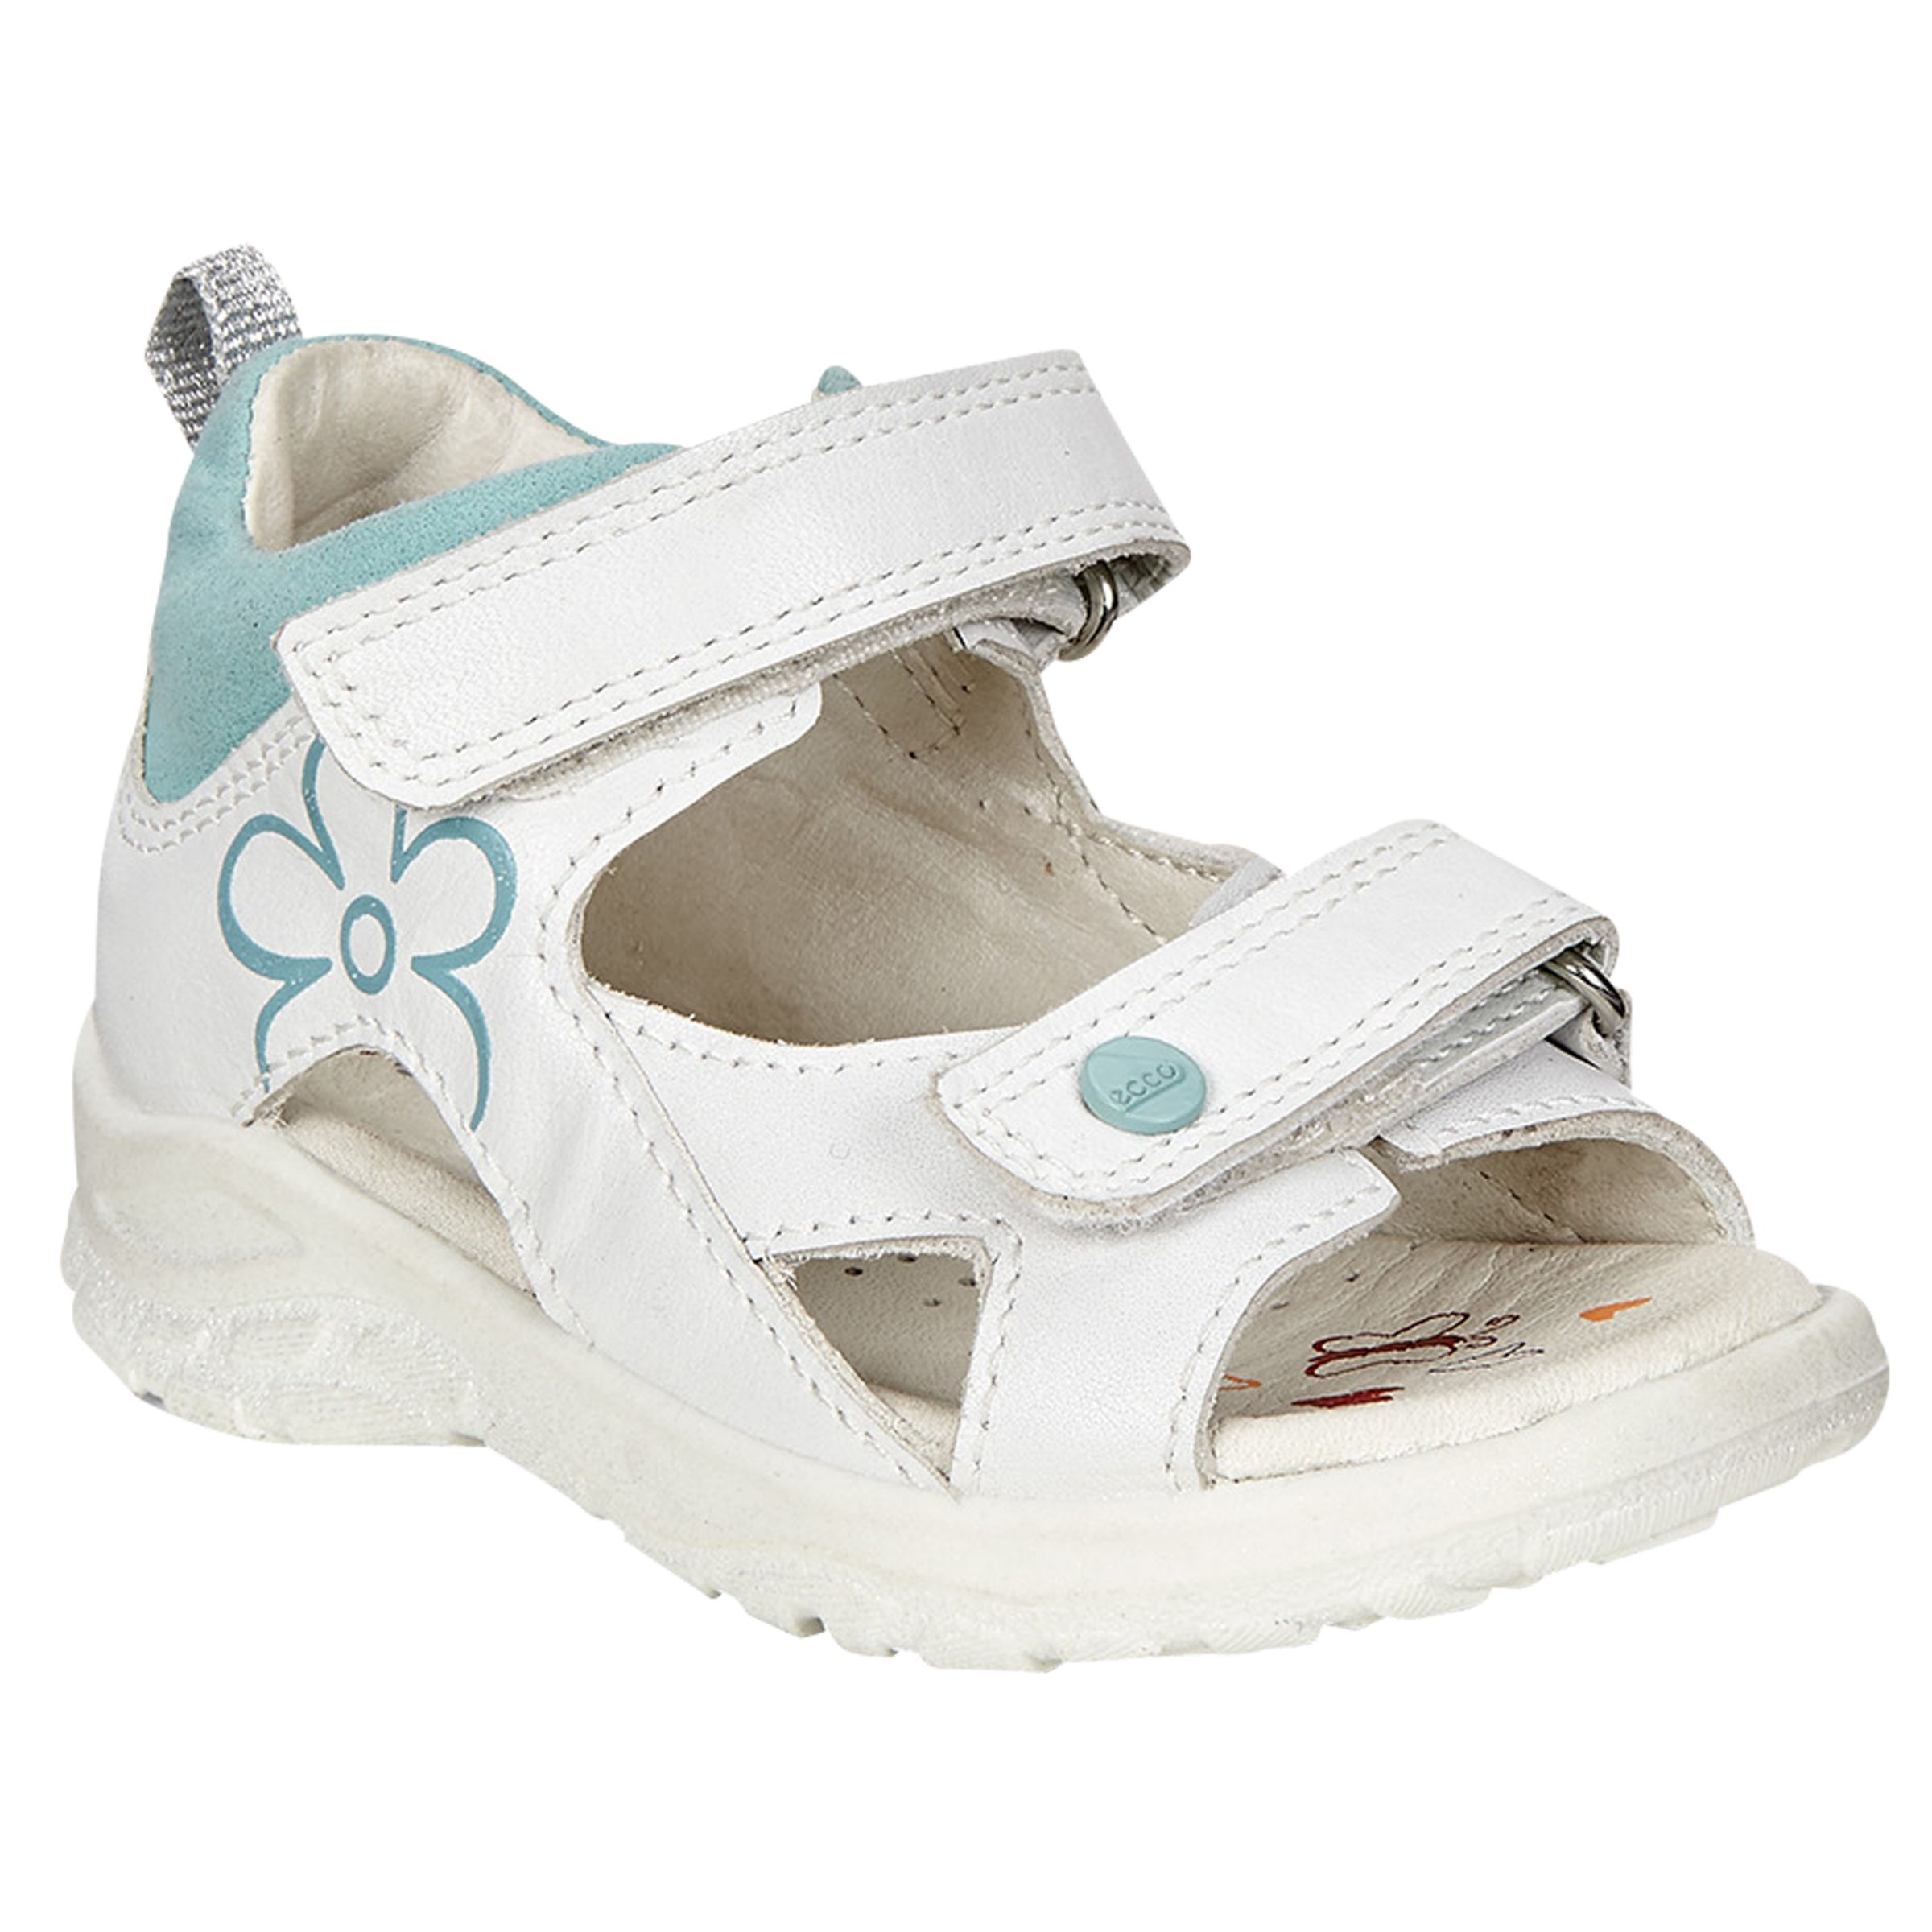 ECCO Children's Peekaboo Sandals, White